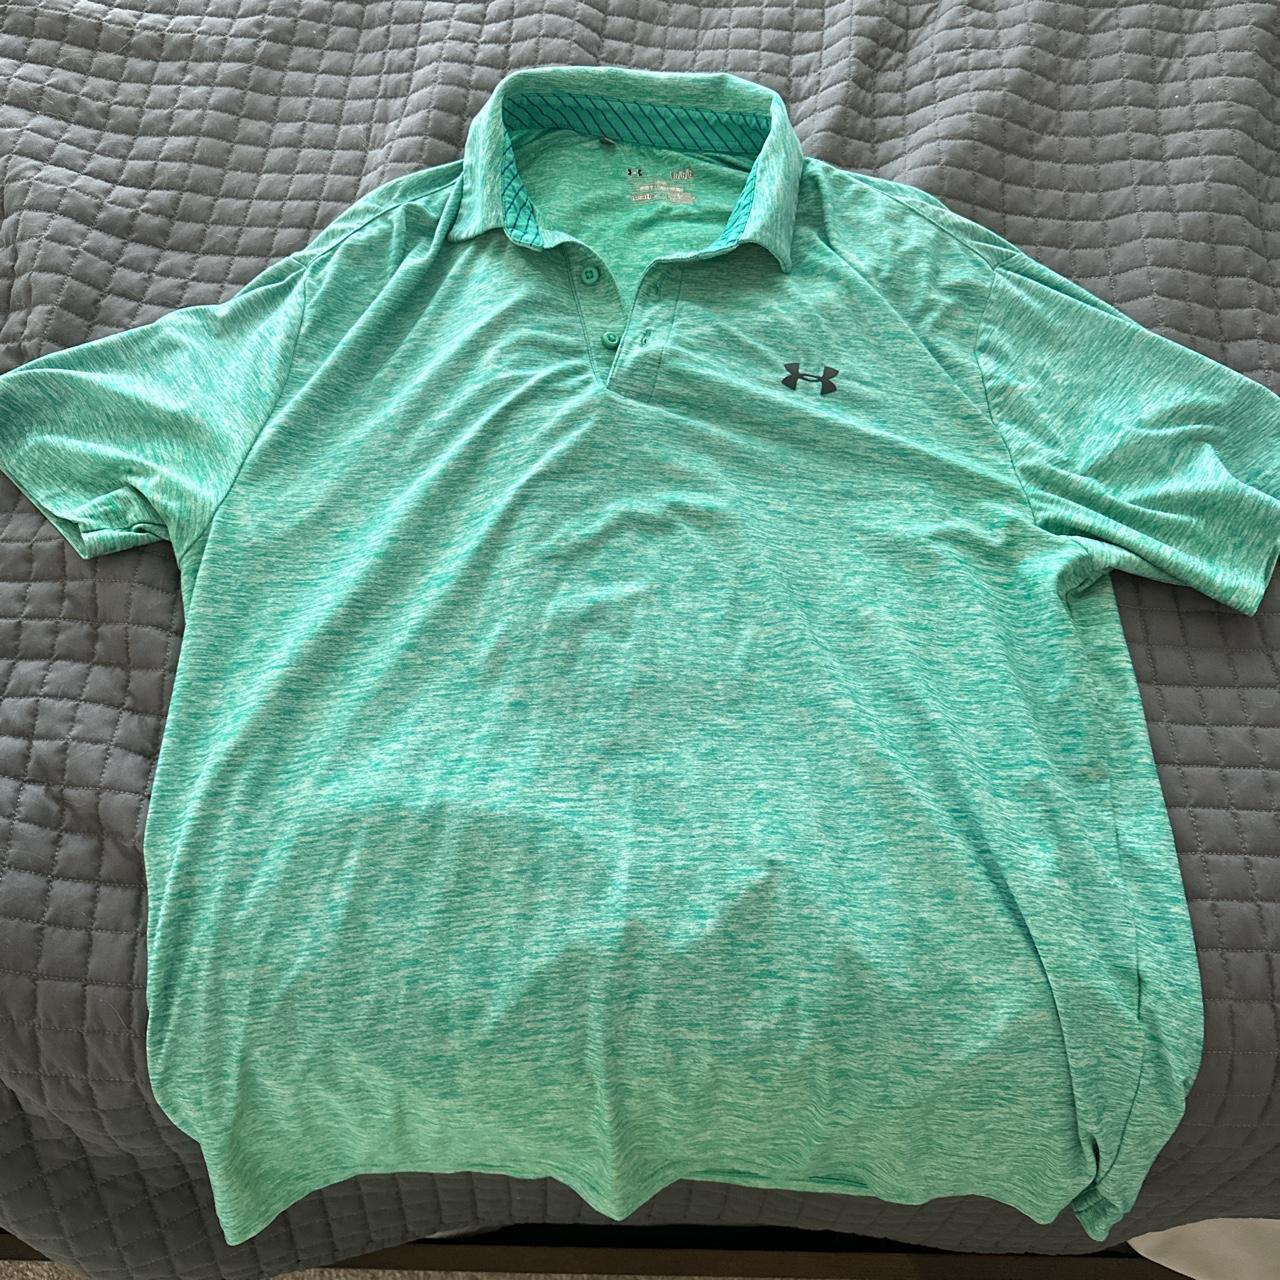 Heathered Green Under Armour Polo Shirt - Depop